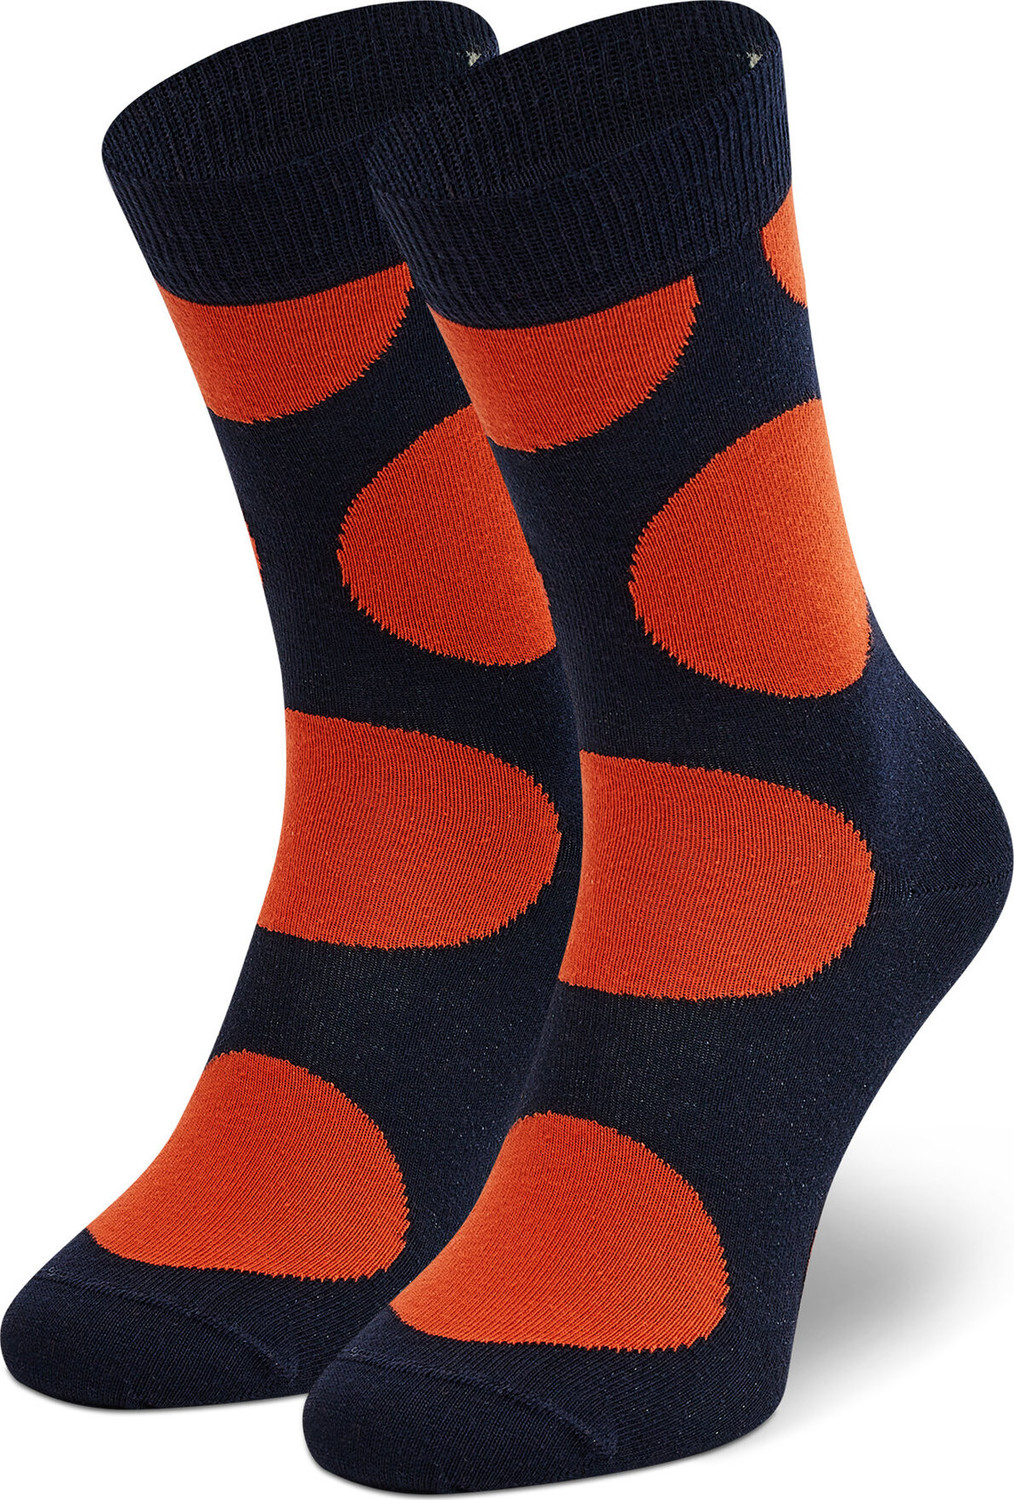 Pánské klasické ponožky Happy Socks JUB01-6501 Tmavomodrá